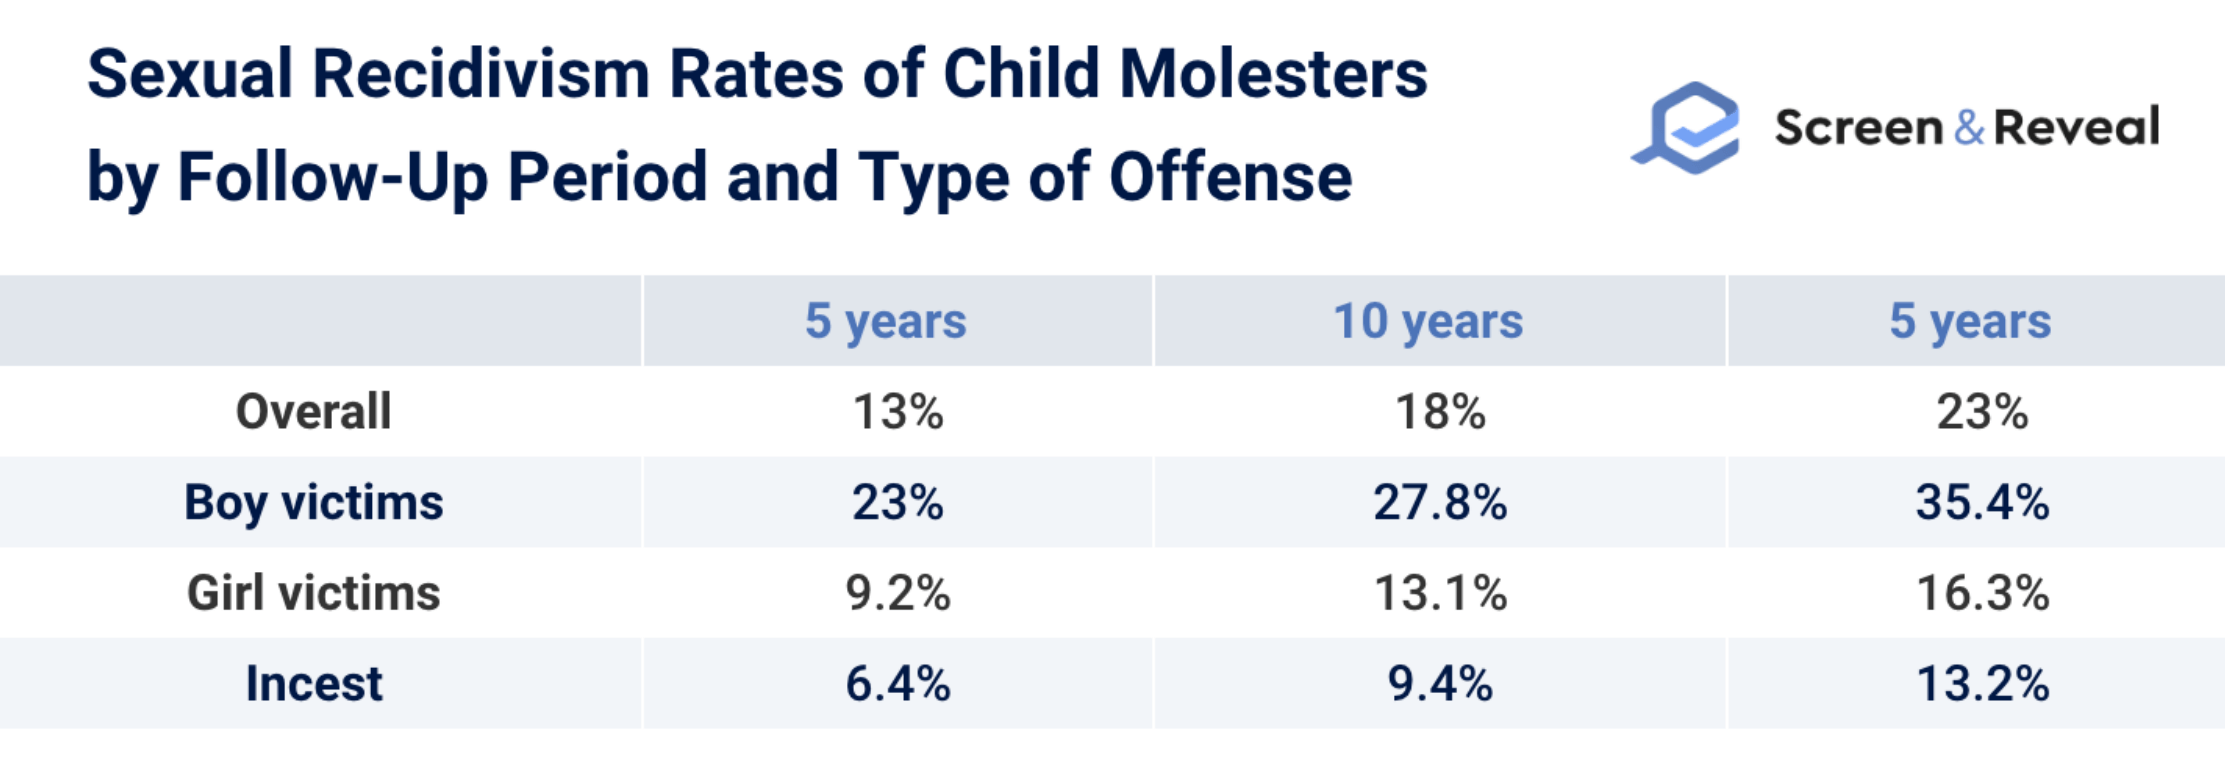 Sexual Recidivism Rates of Child Molesters